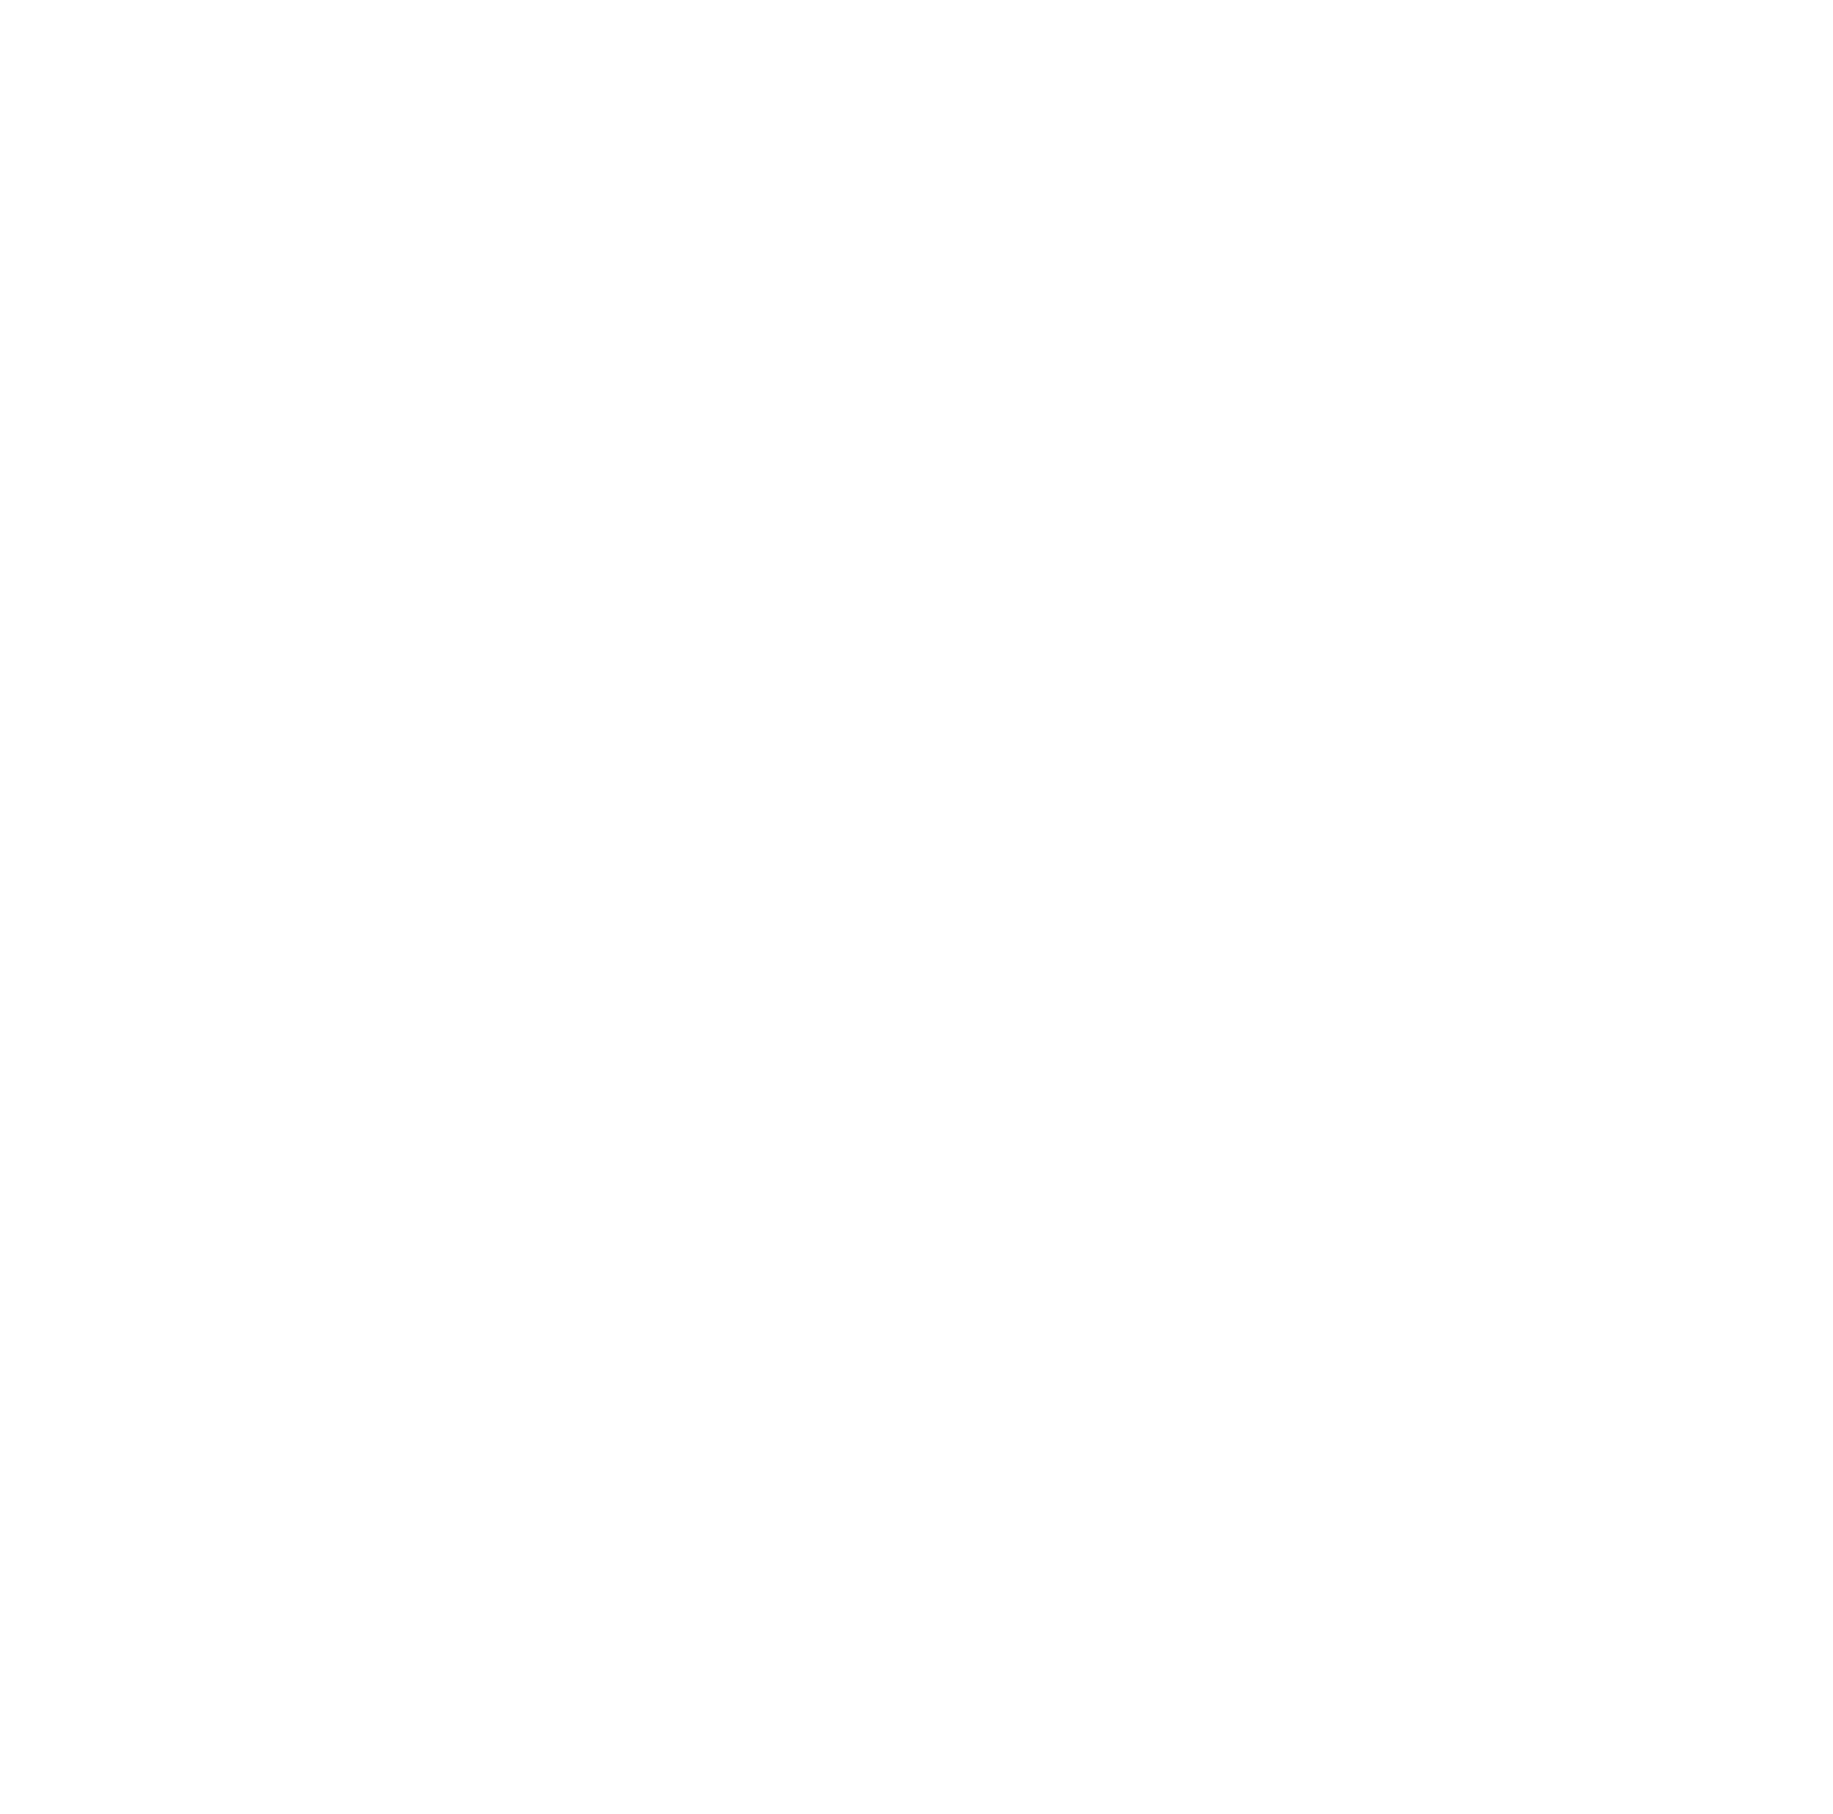 The Kelburn Brewing Company